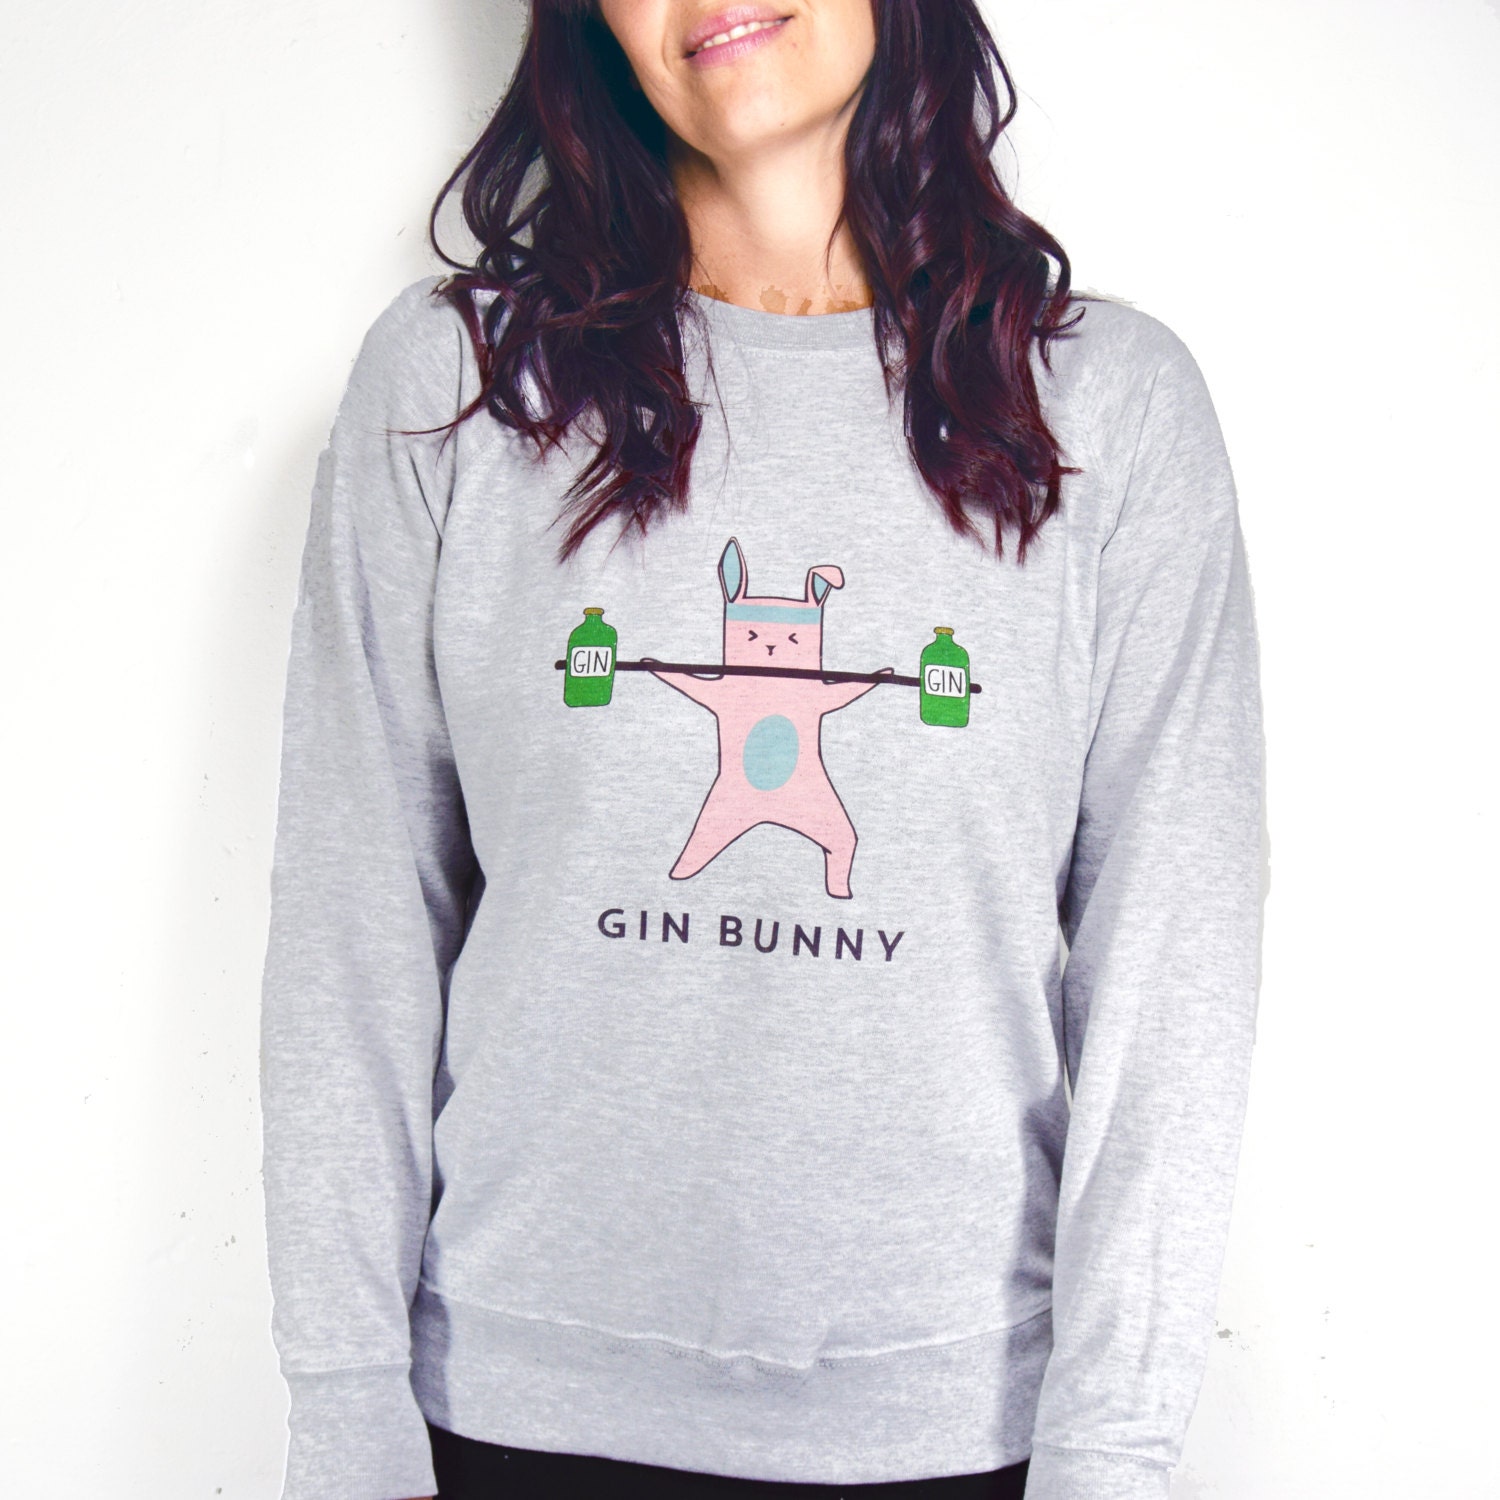 Gin Bunny Womens Sweatshirt, Activewear, Gym & Tonic, Gym, Gift, Clothing, Sweater, Sweater